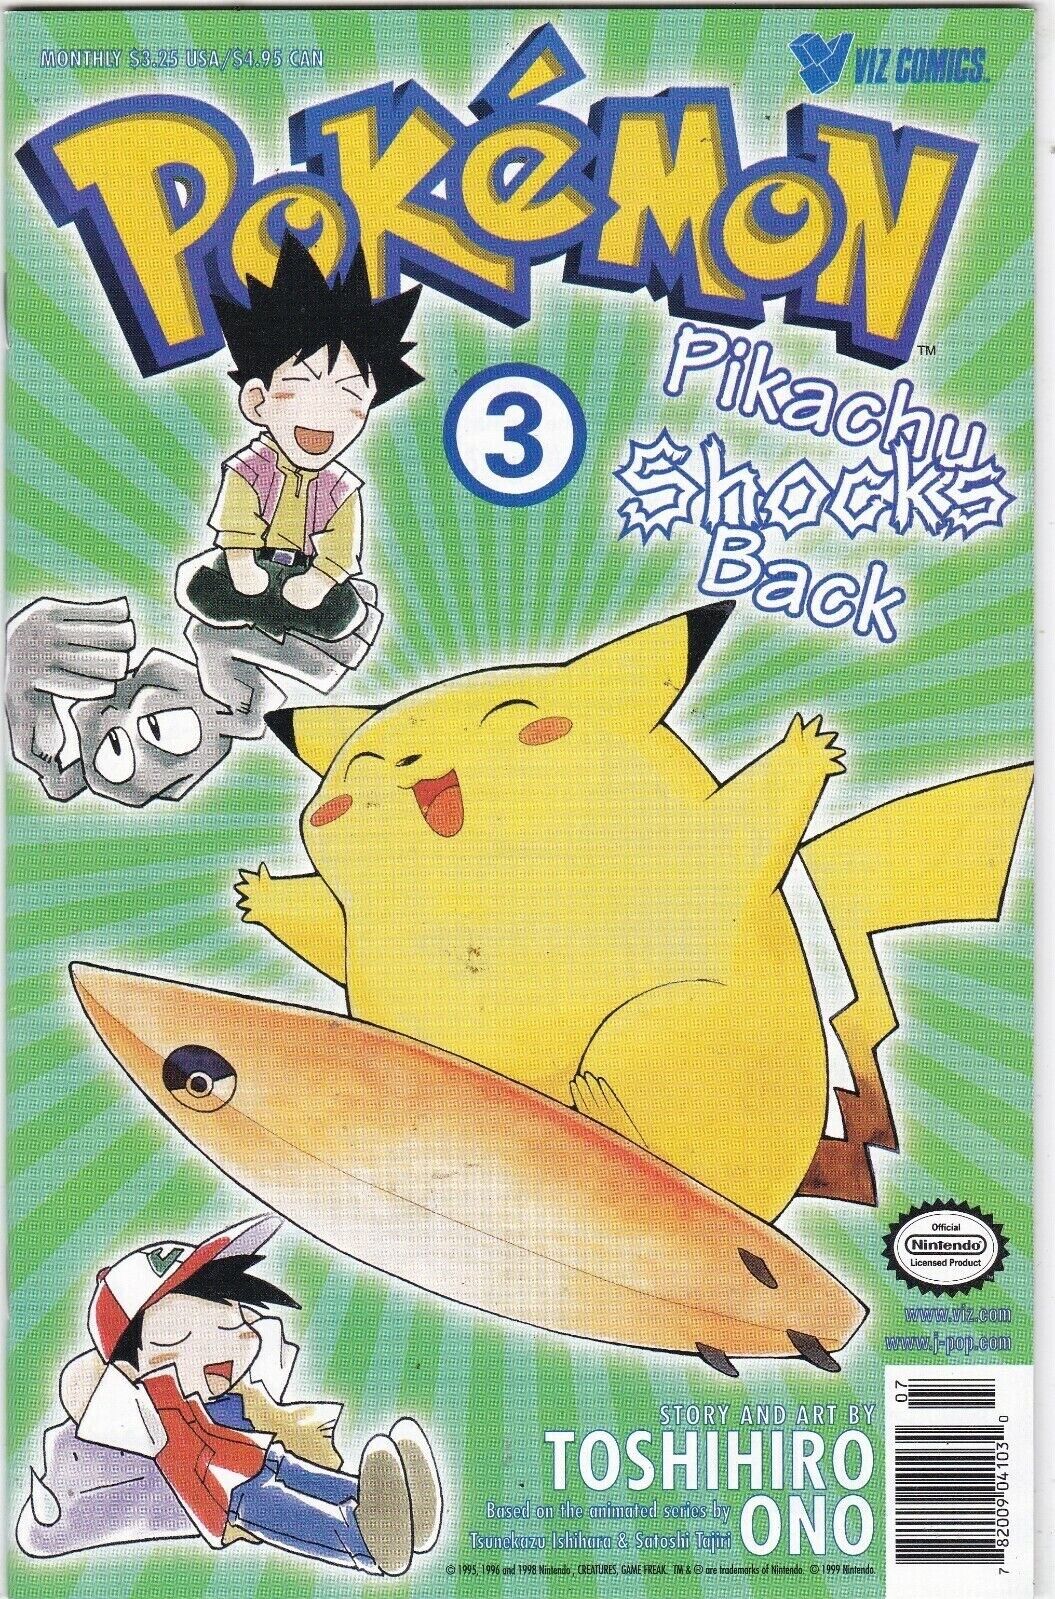 Pokémon: Pikachu Shocks Back (1999) #3 5th Print VF Stock Image